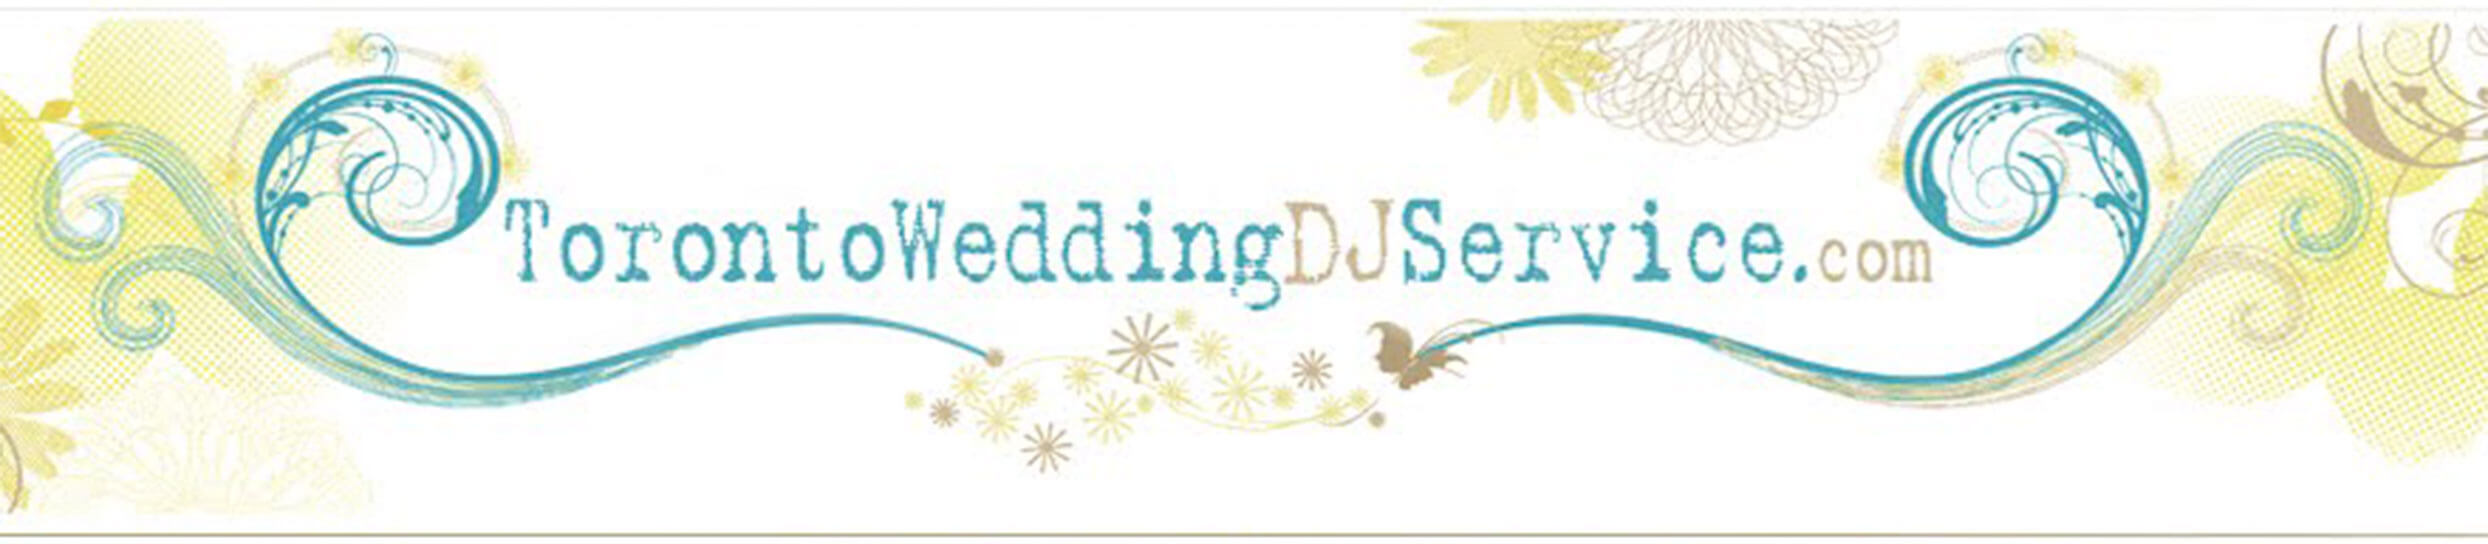 Toronto Wedding DJ Services